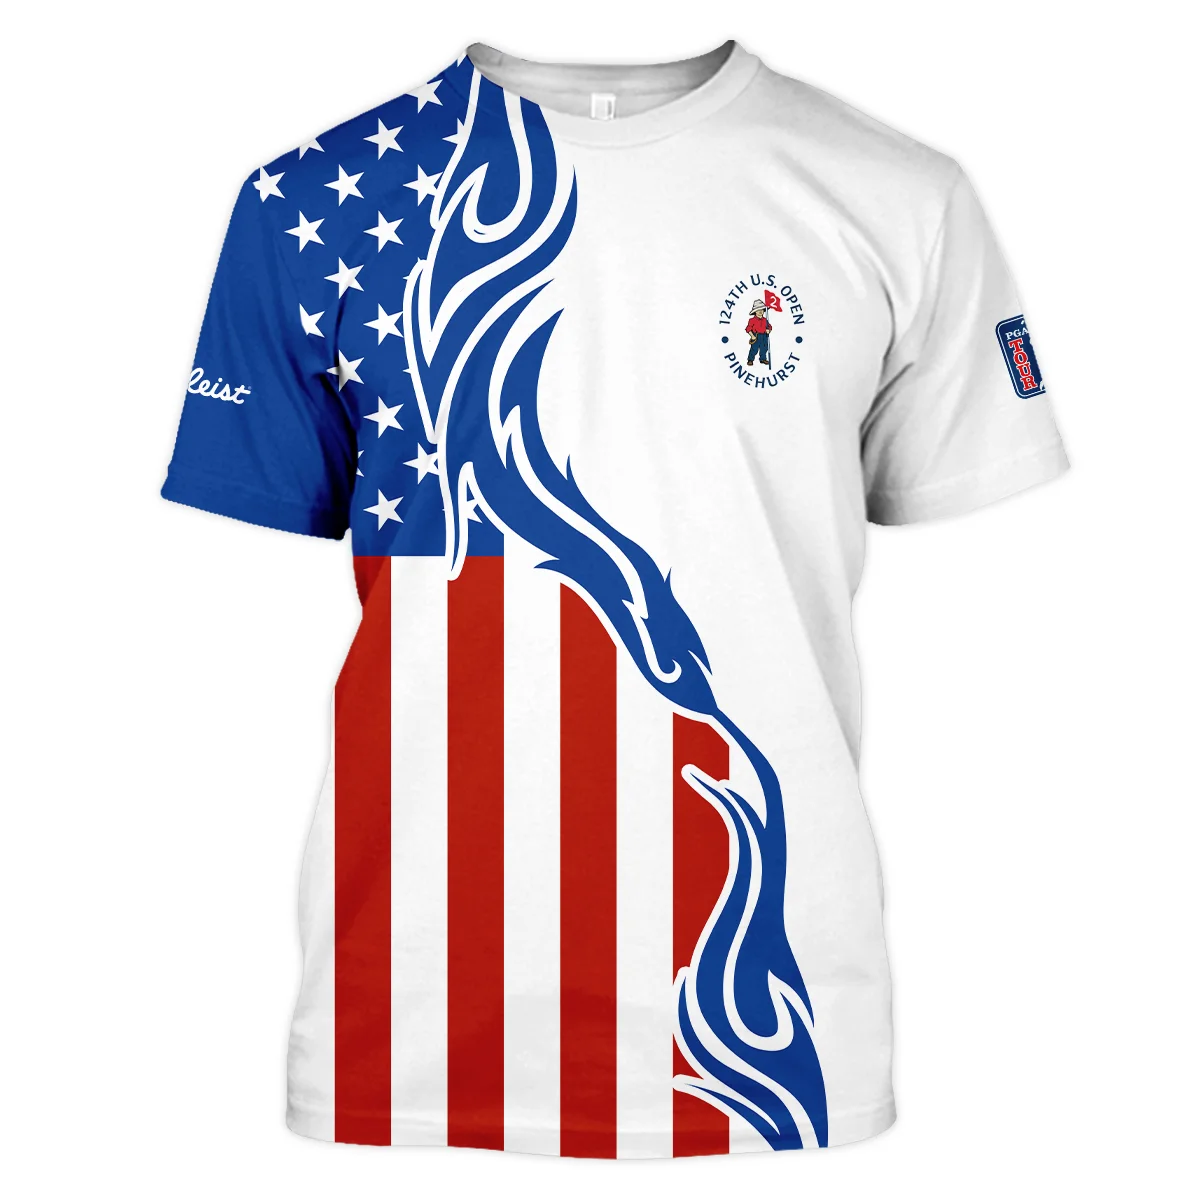 Golf Sport Titleist 124th U.S. Open Pinehurst Unisex T-Shirt USA Flag Pattern Blue White All Over Print T-Shirt